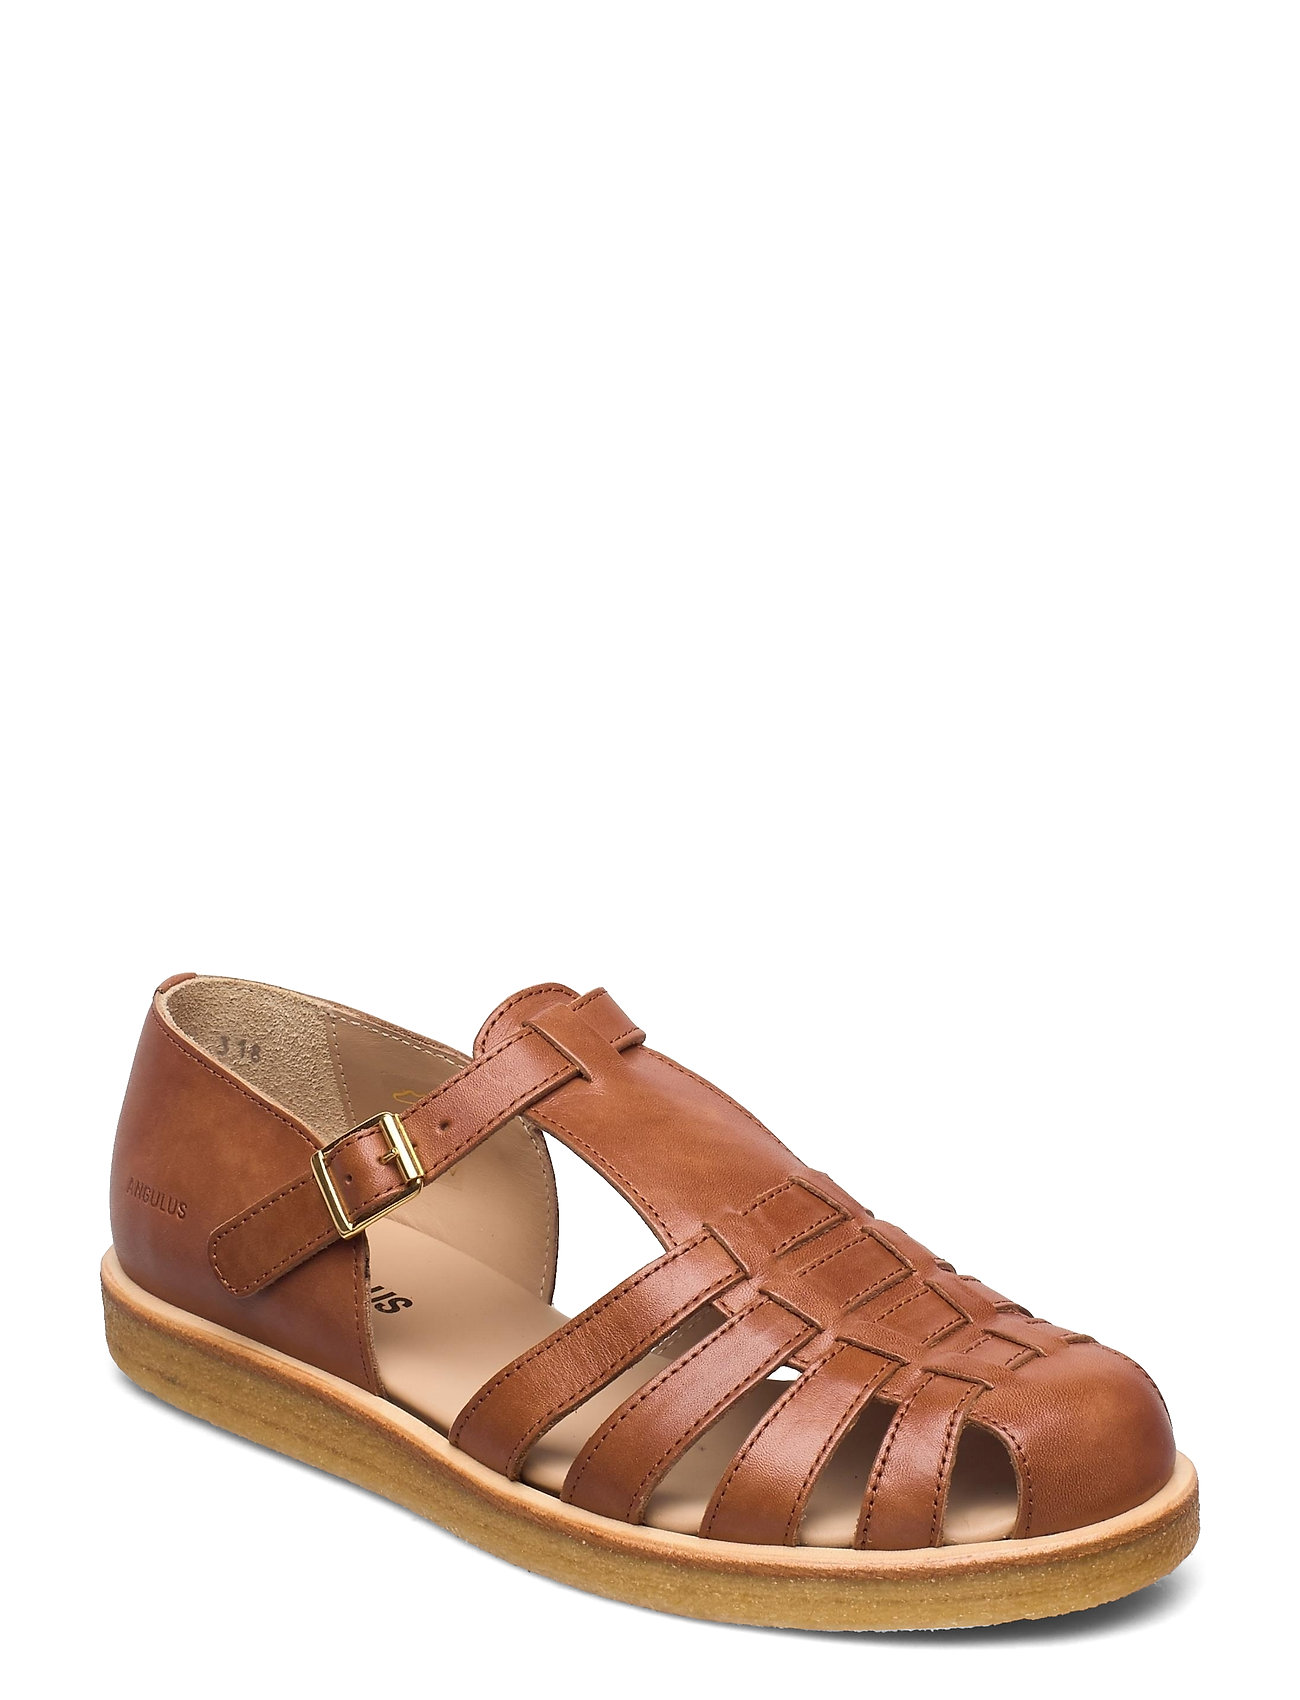 Sandals - Flat - Closed Toe - Op Shoes Summer Shoes Flat Sandals Ruskea ANGULUS